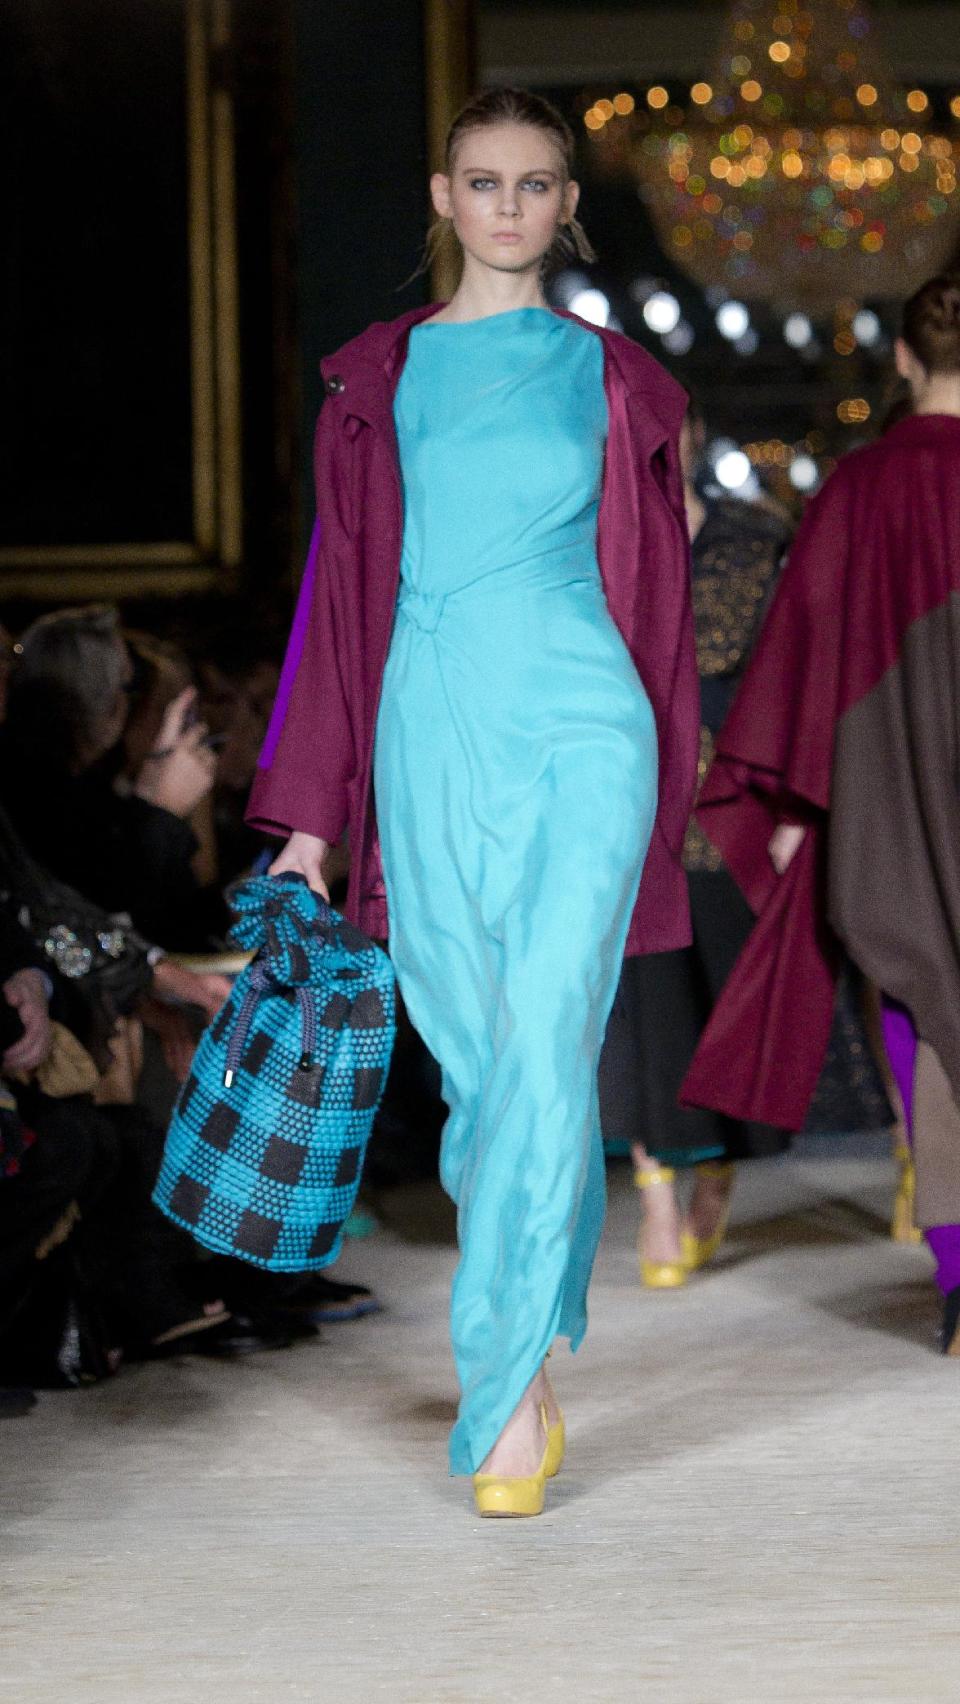 A model wears a creation by designer Roksanda Ilincic during a show at London Fashion Week, Tuesday, Feb. 21, 2012. (AP Photo/Joel Ryan)